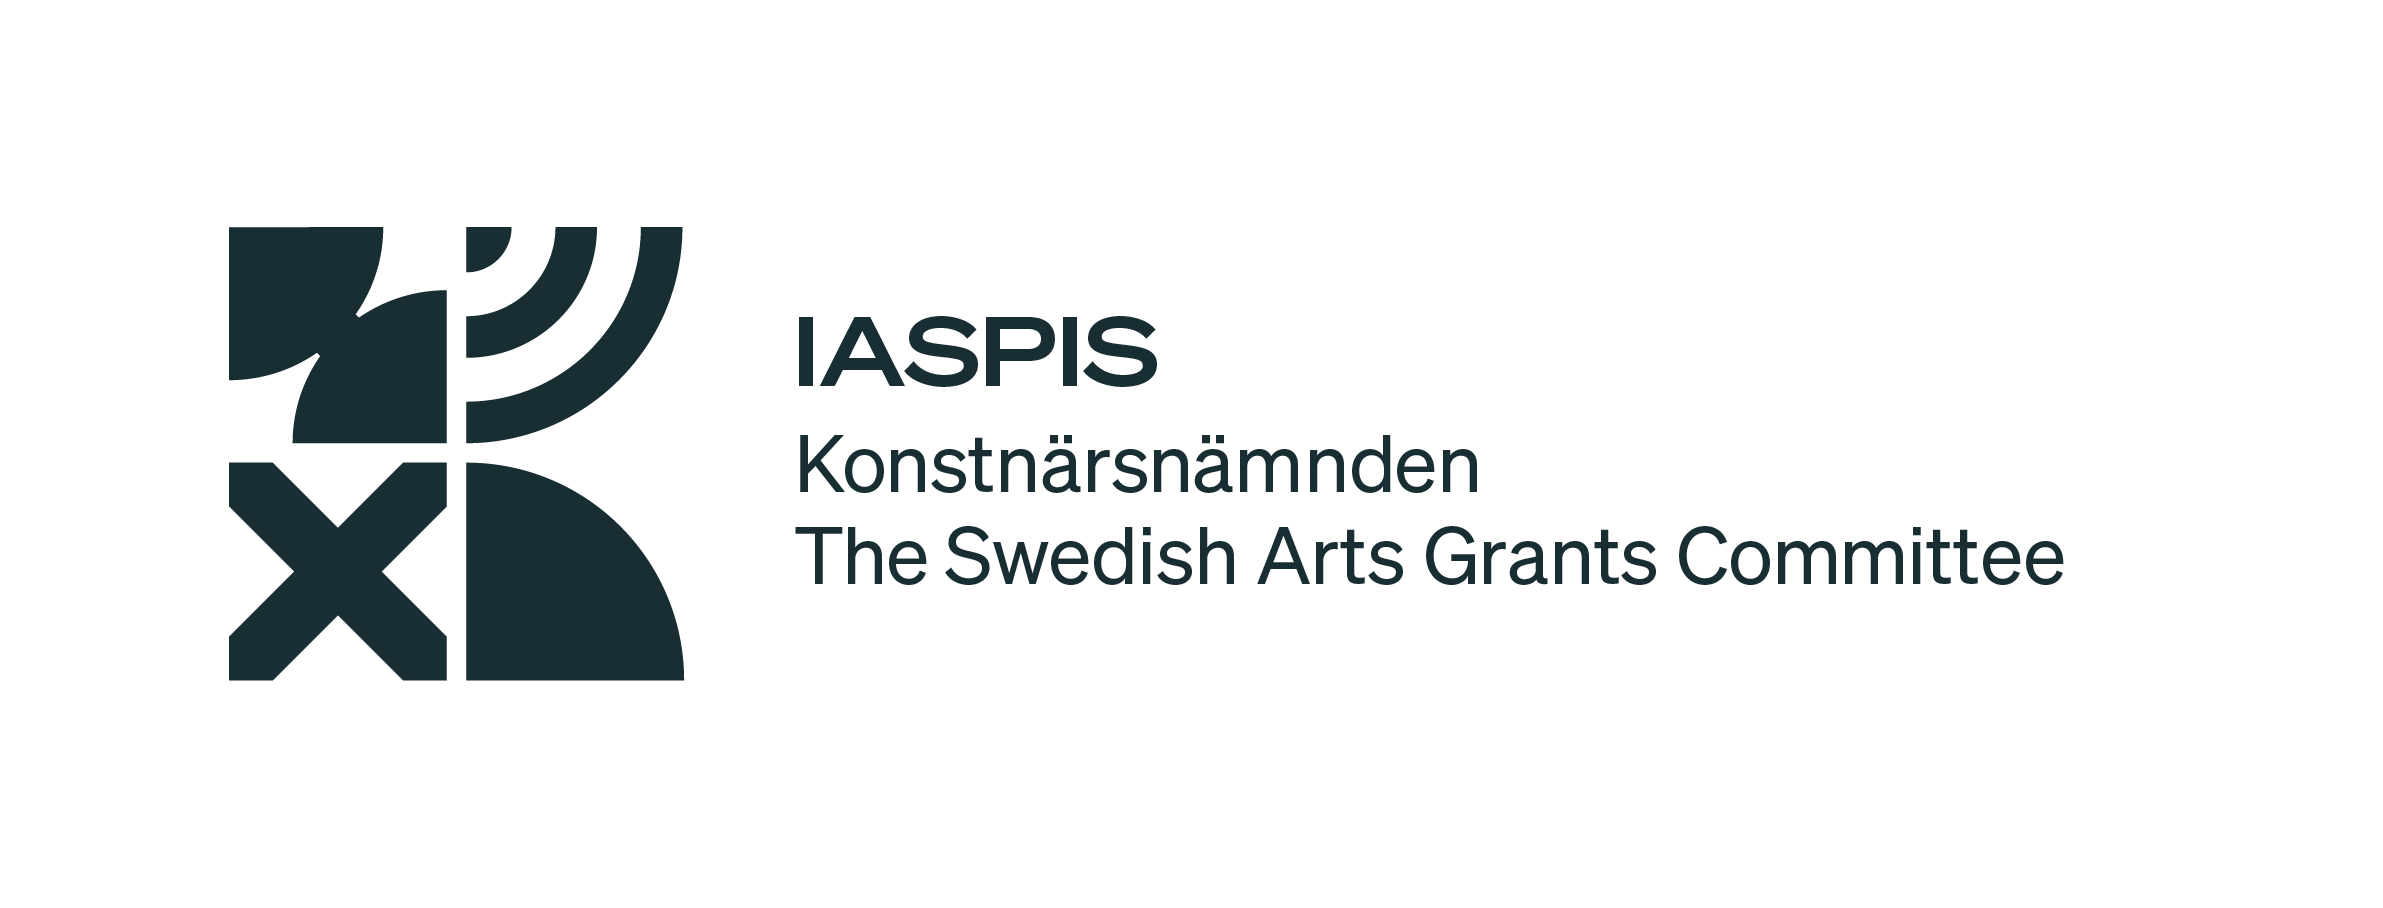 IASPIS-logotyp-för-webb-med-svart-text.png